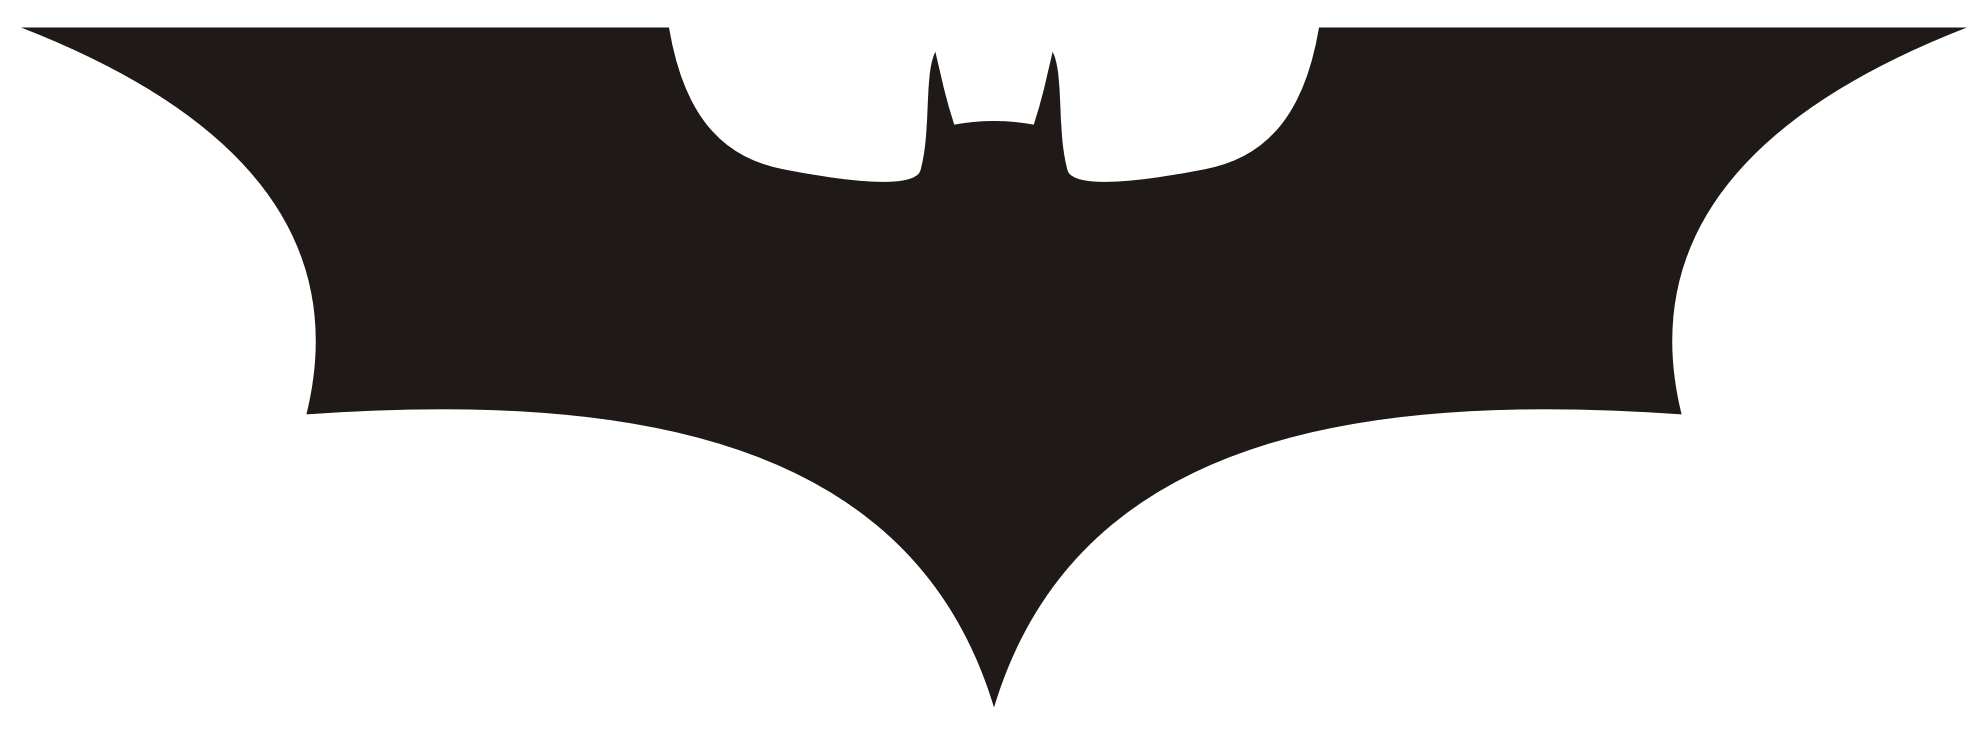 batman logo 02